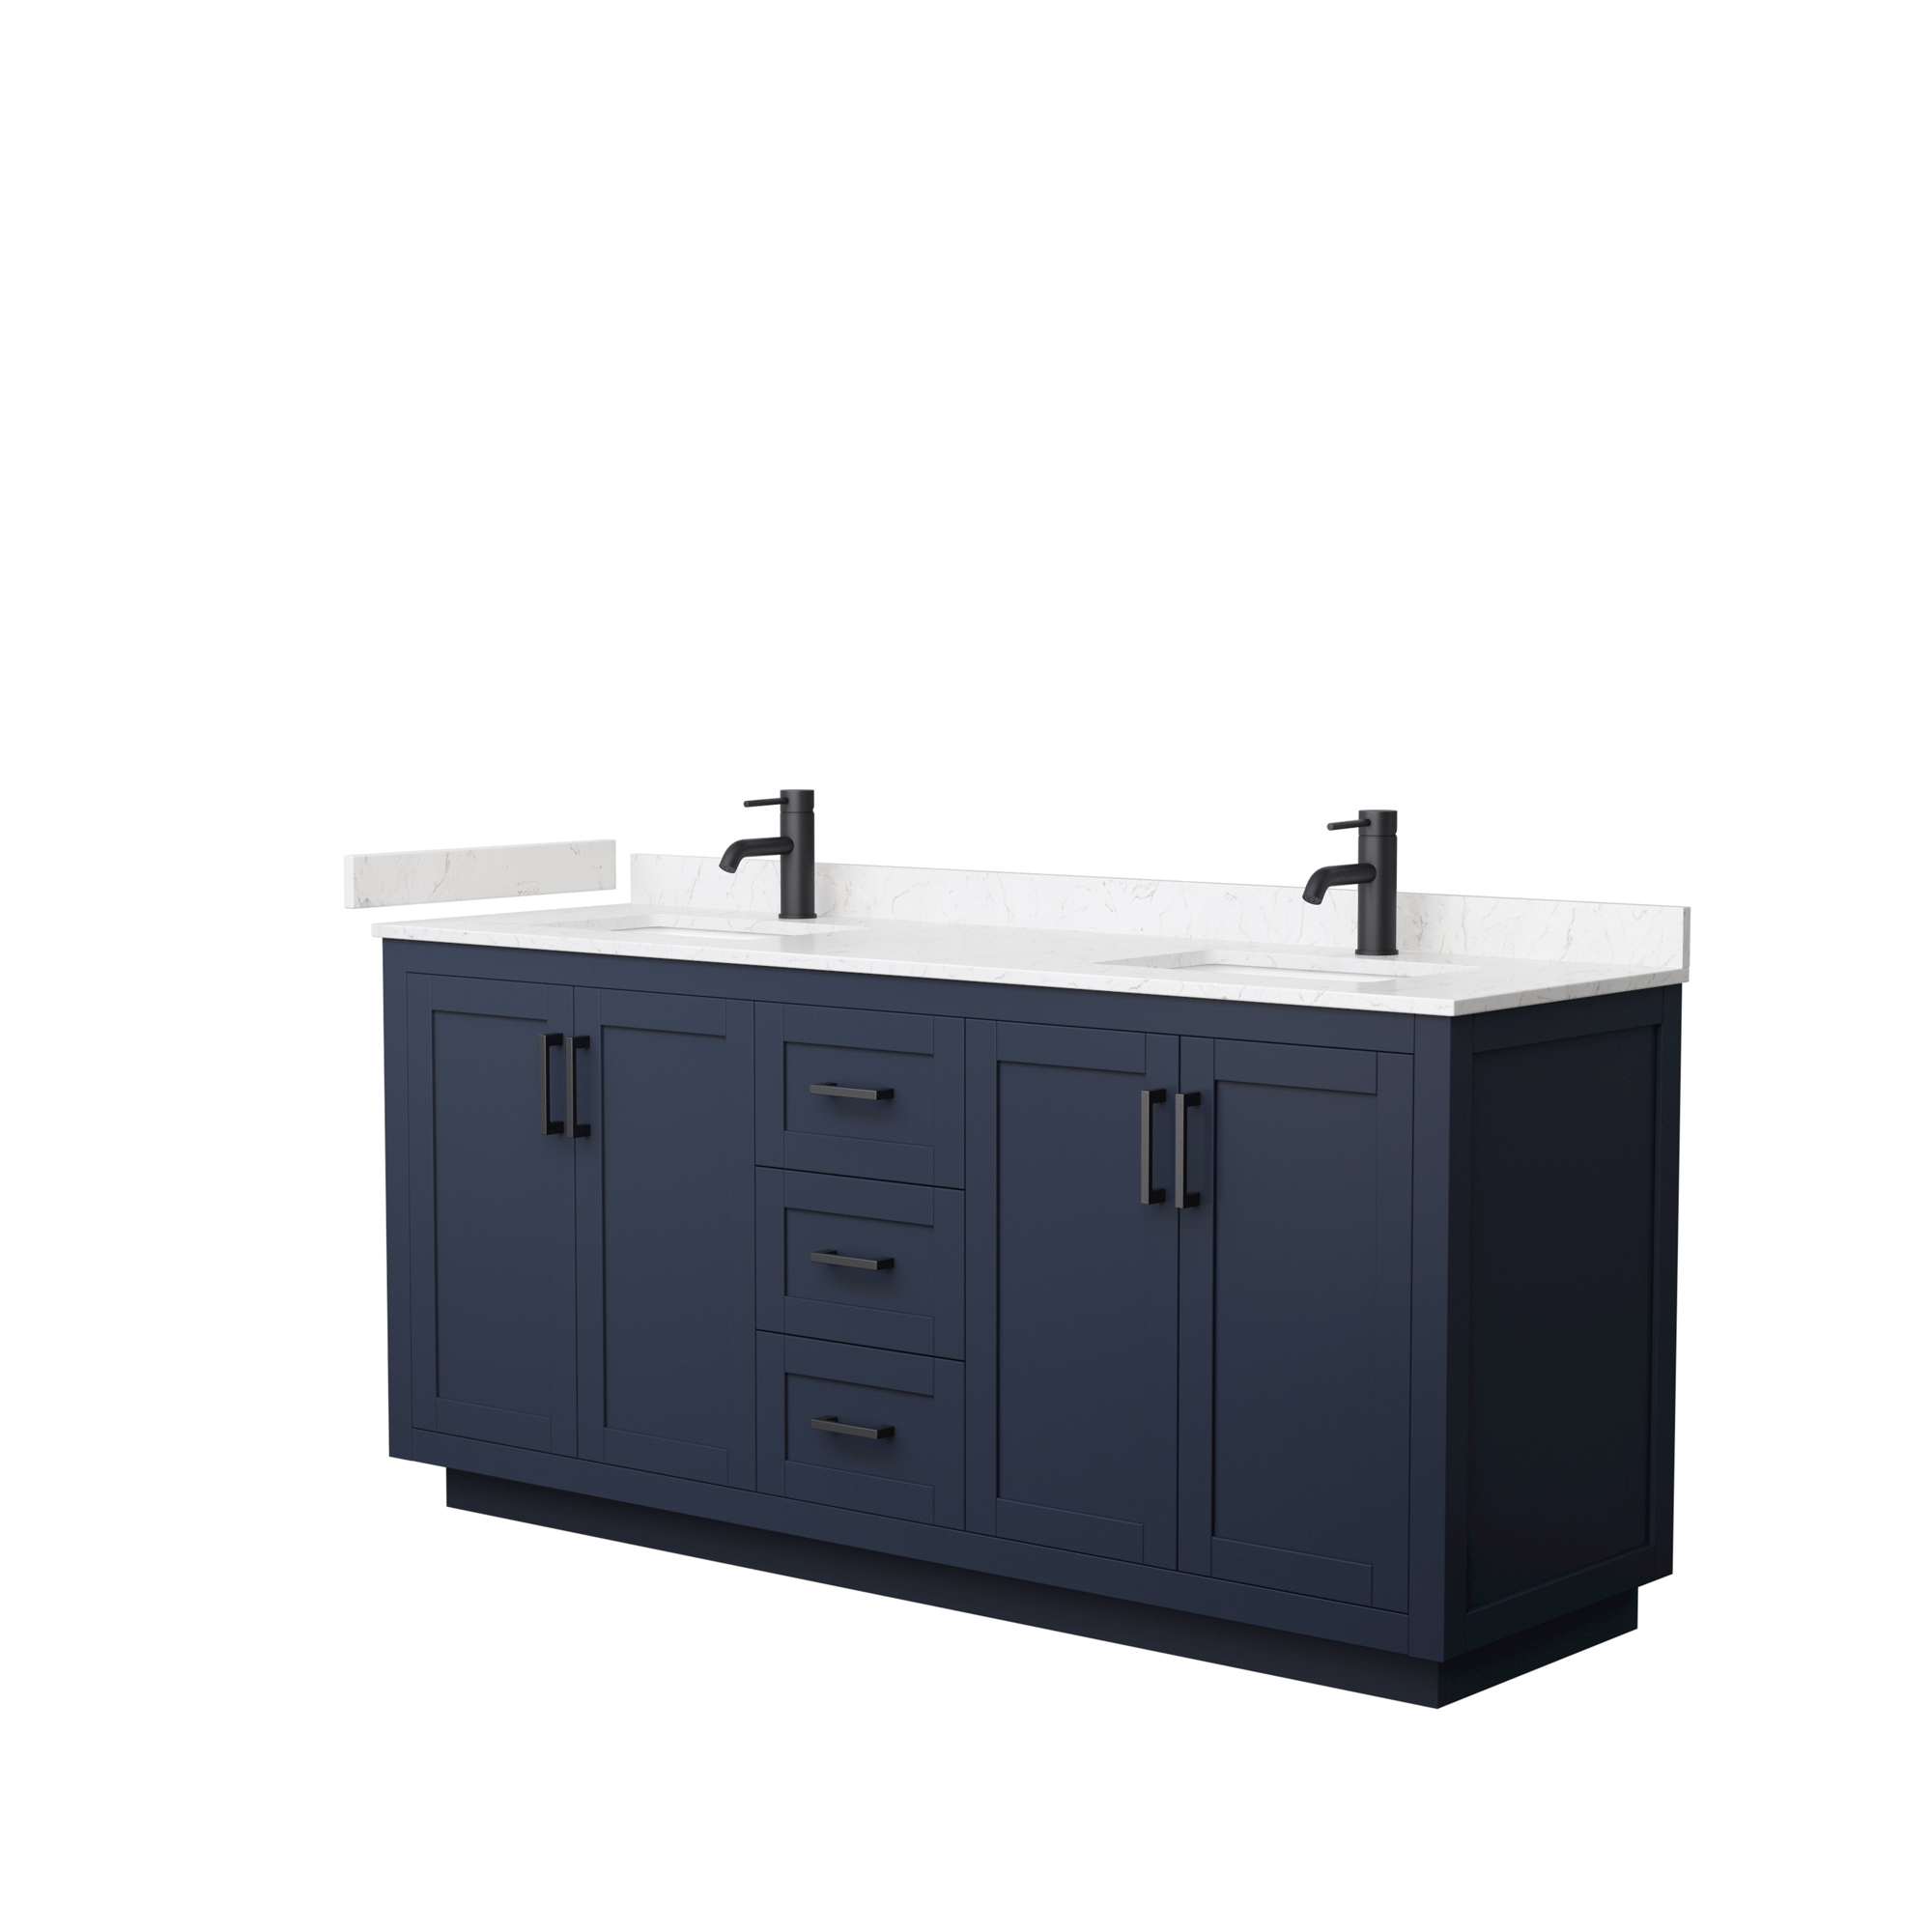 72" Double Bathroom Vanity in Dark Blue, Light-Vein Carrara Cultured Marble Countertop, Undermount Square Sinks, Matte Black Trim